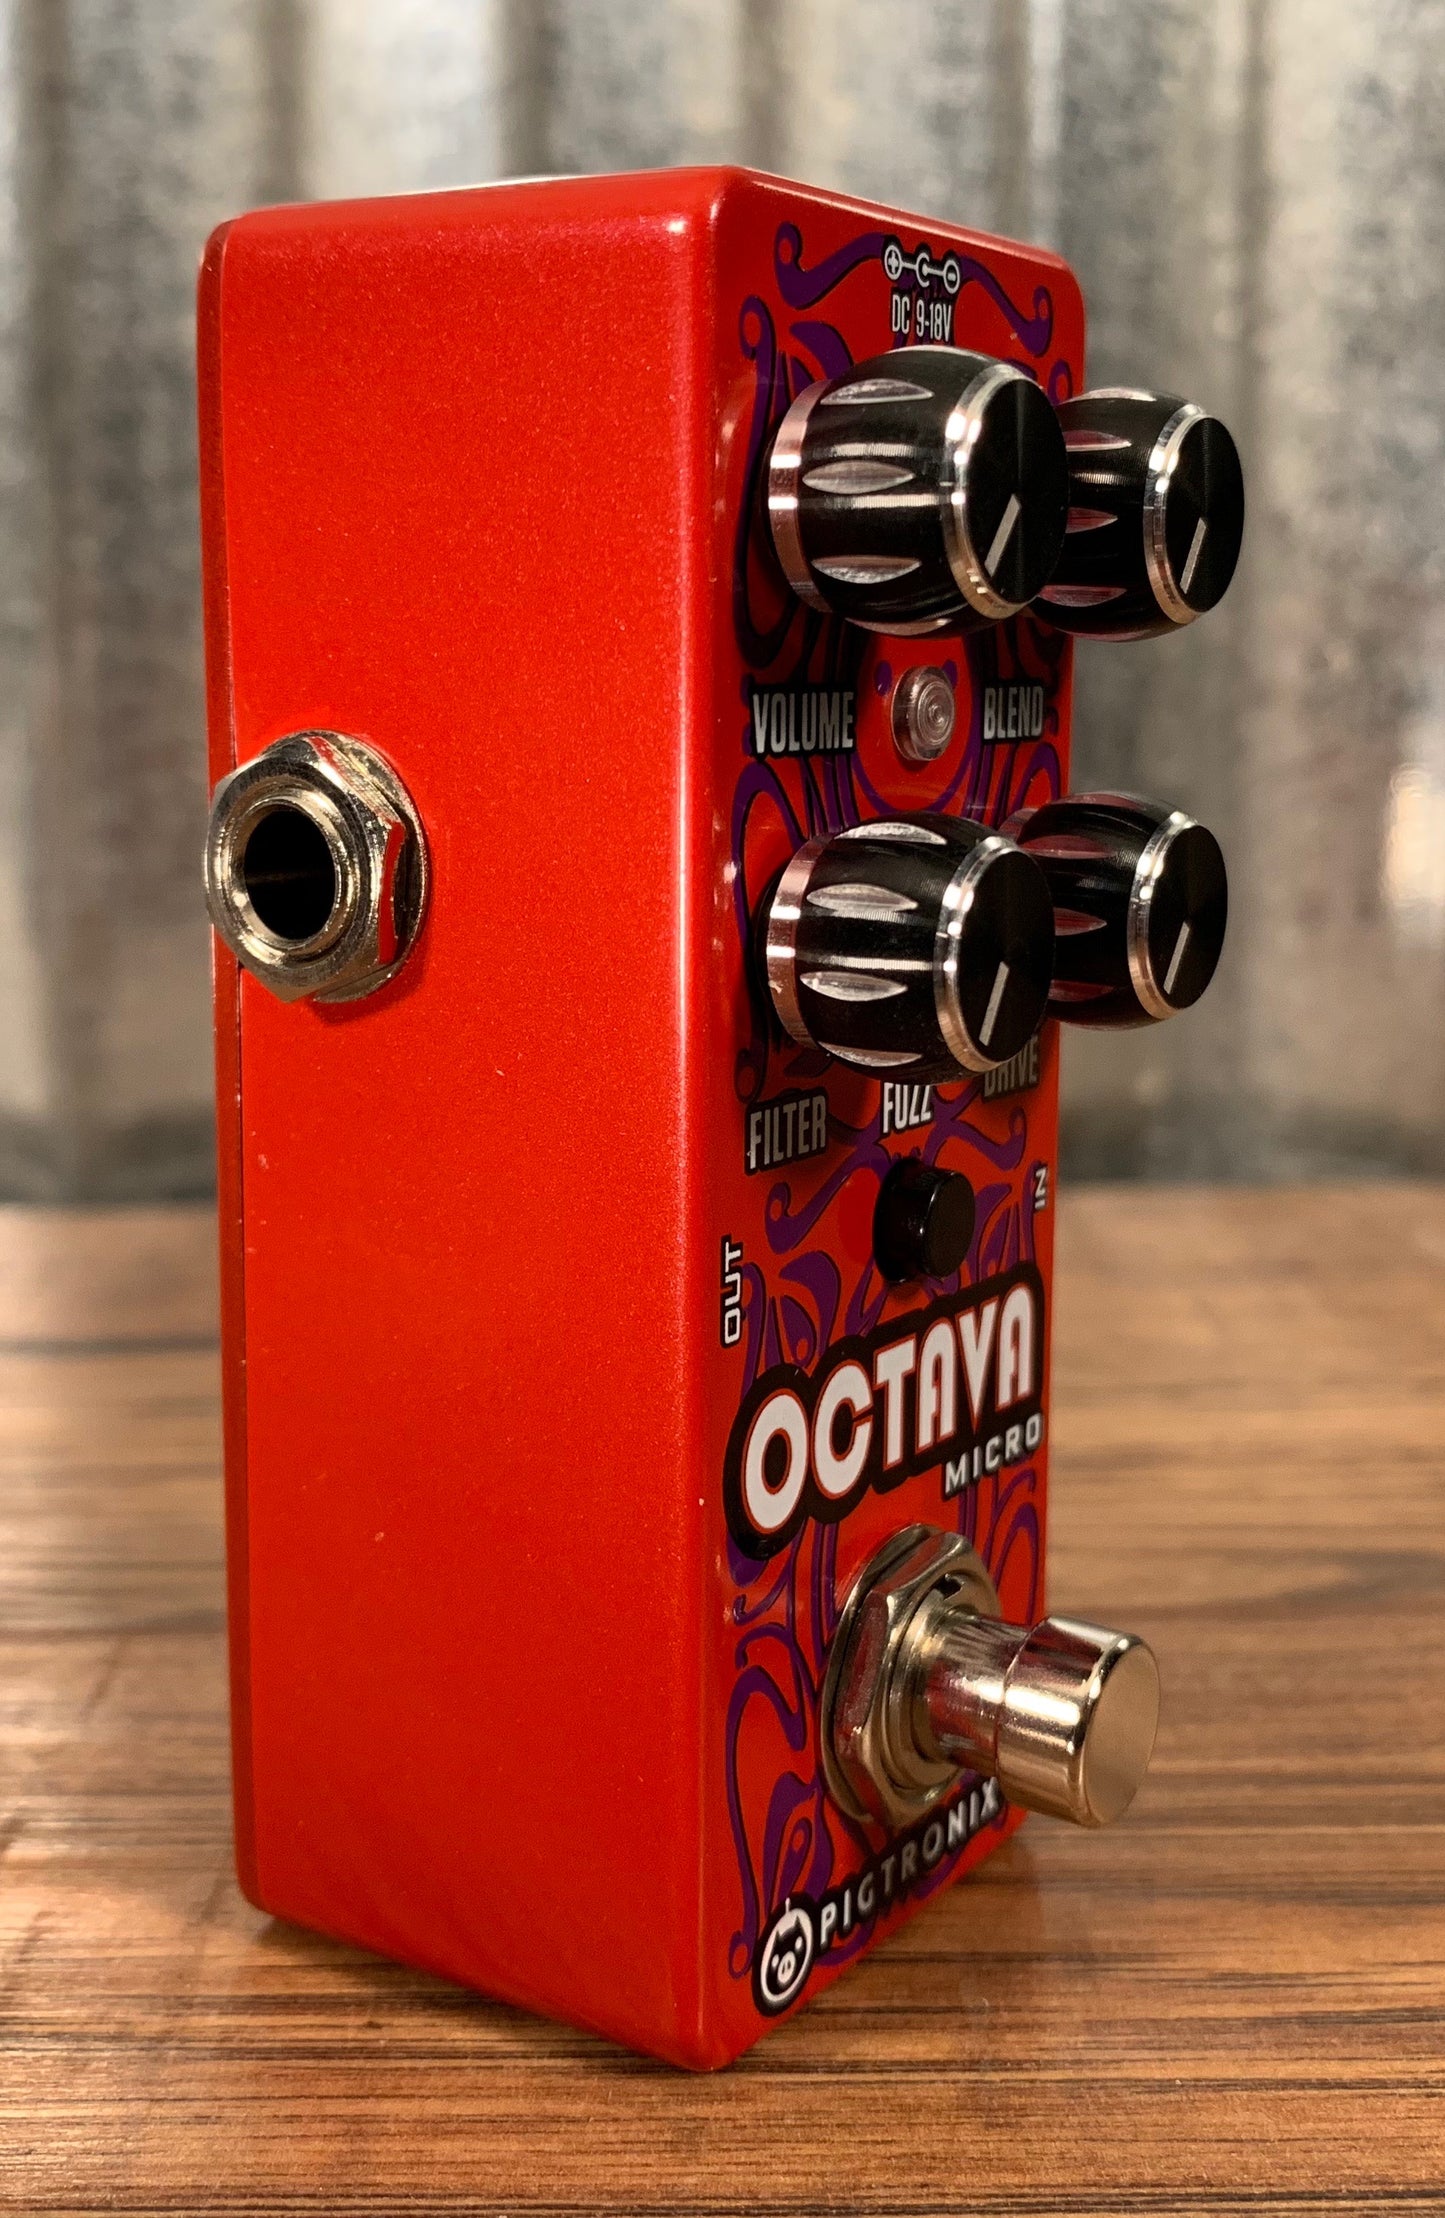 Pigtronix OCT Octava Micro Octave Fuzz Guitar Effect Pedal Demo